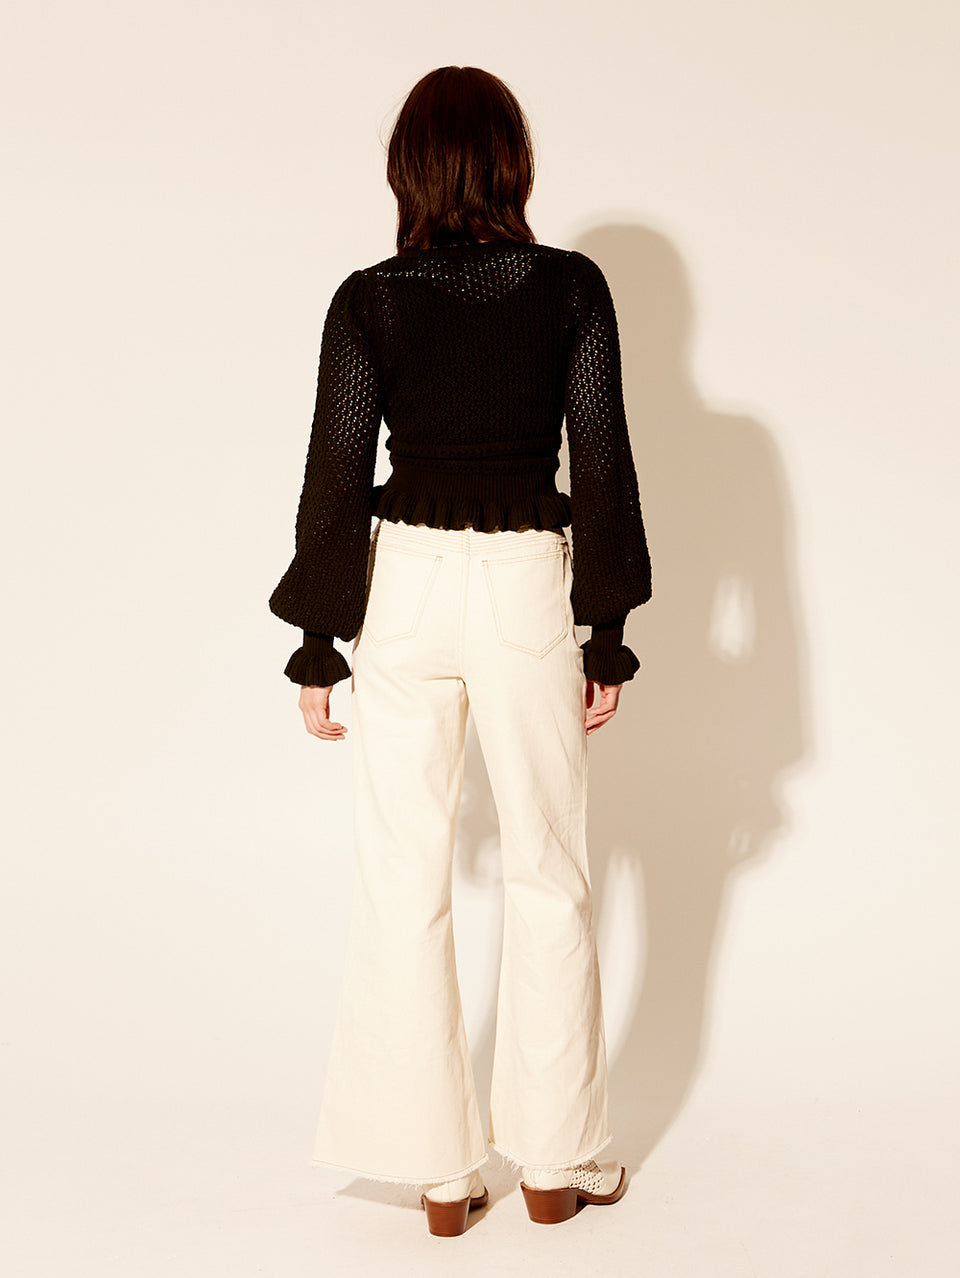 Rafaela Knit Top KIVARI | Model wears black knit top back view